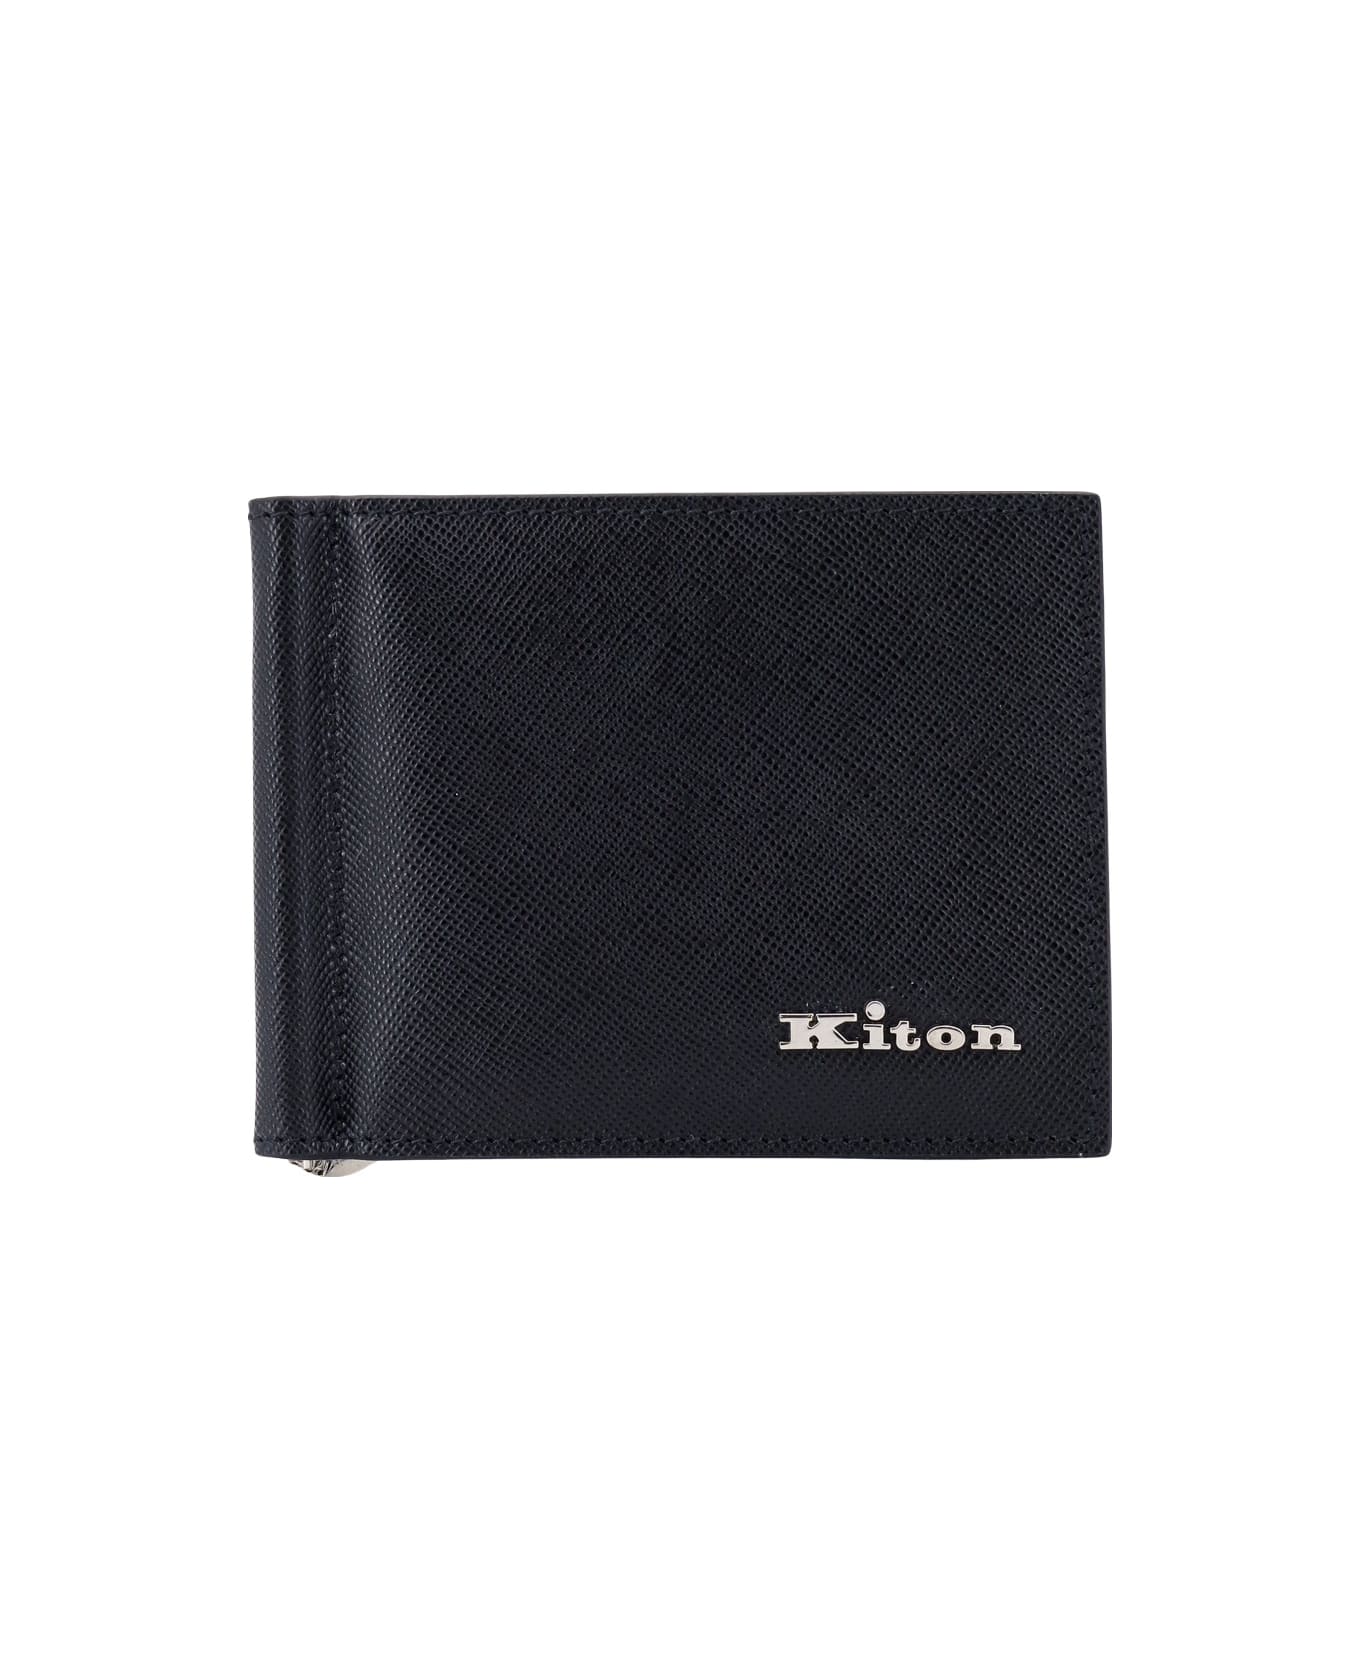 Kiton Card Holder - Black 財布